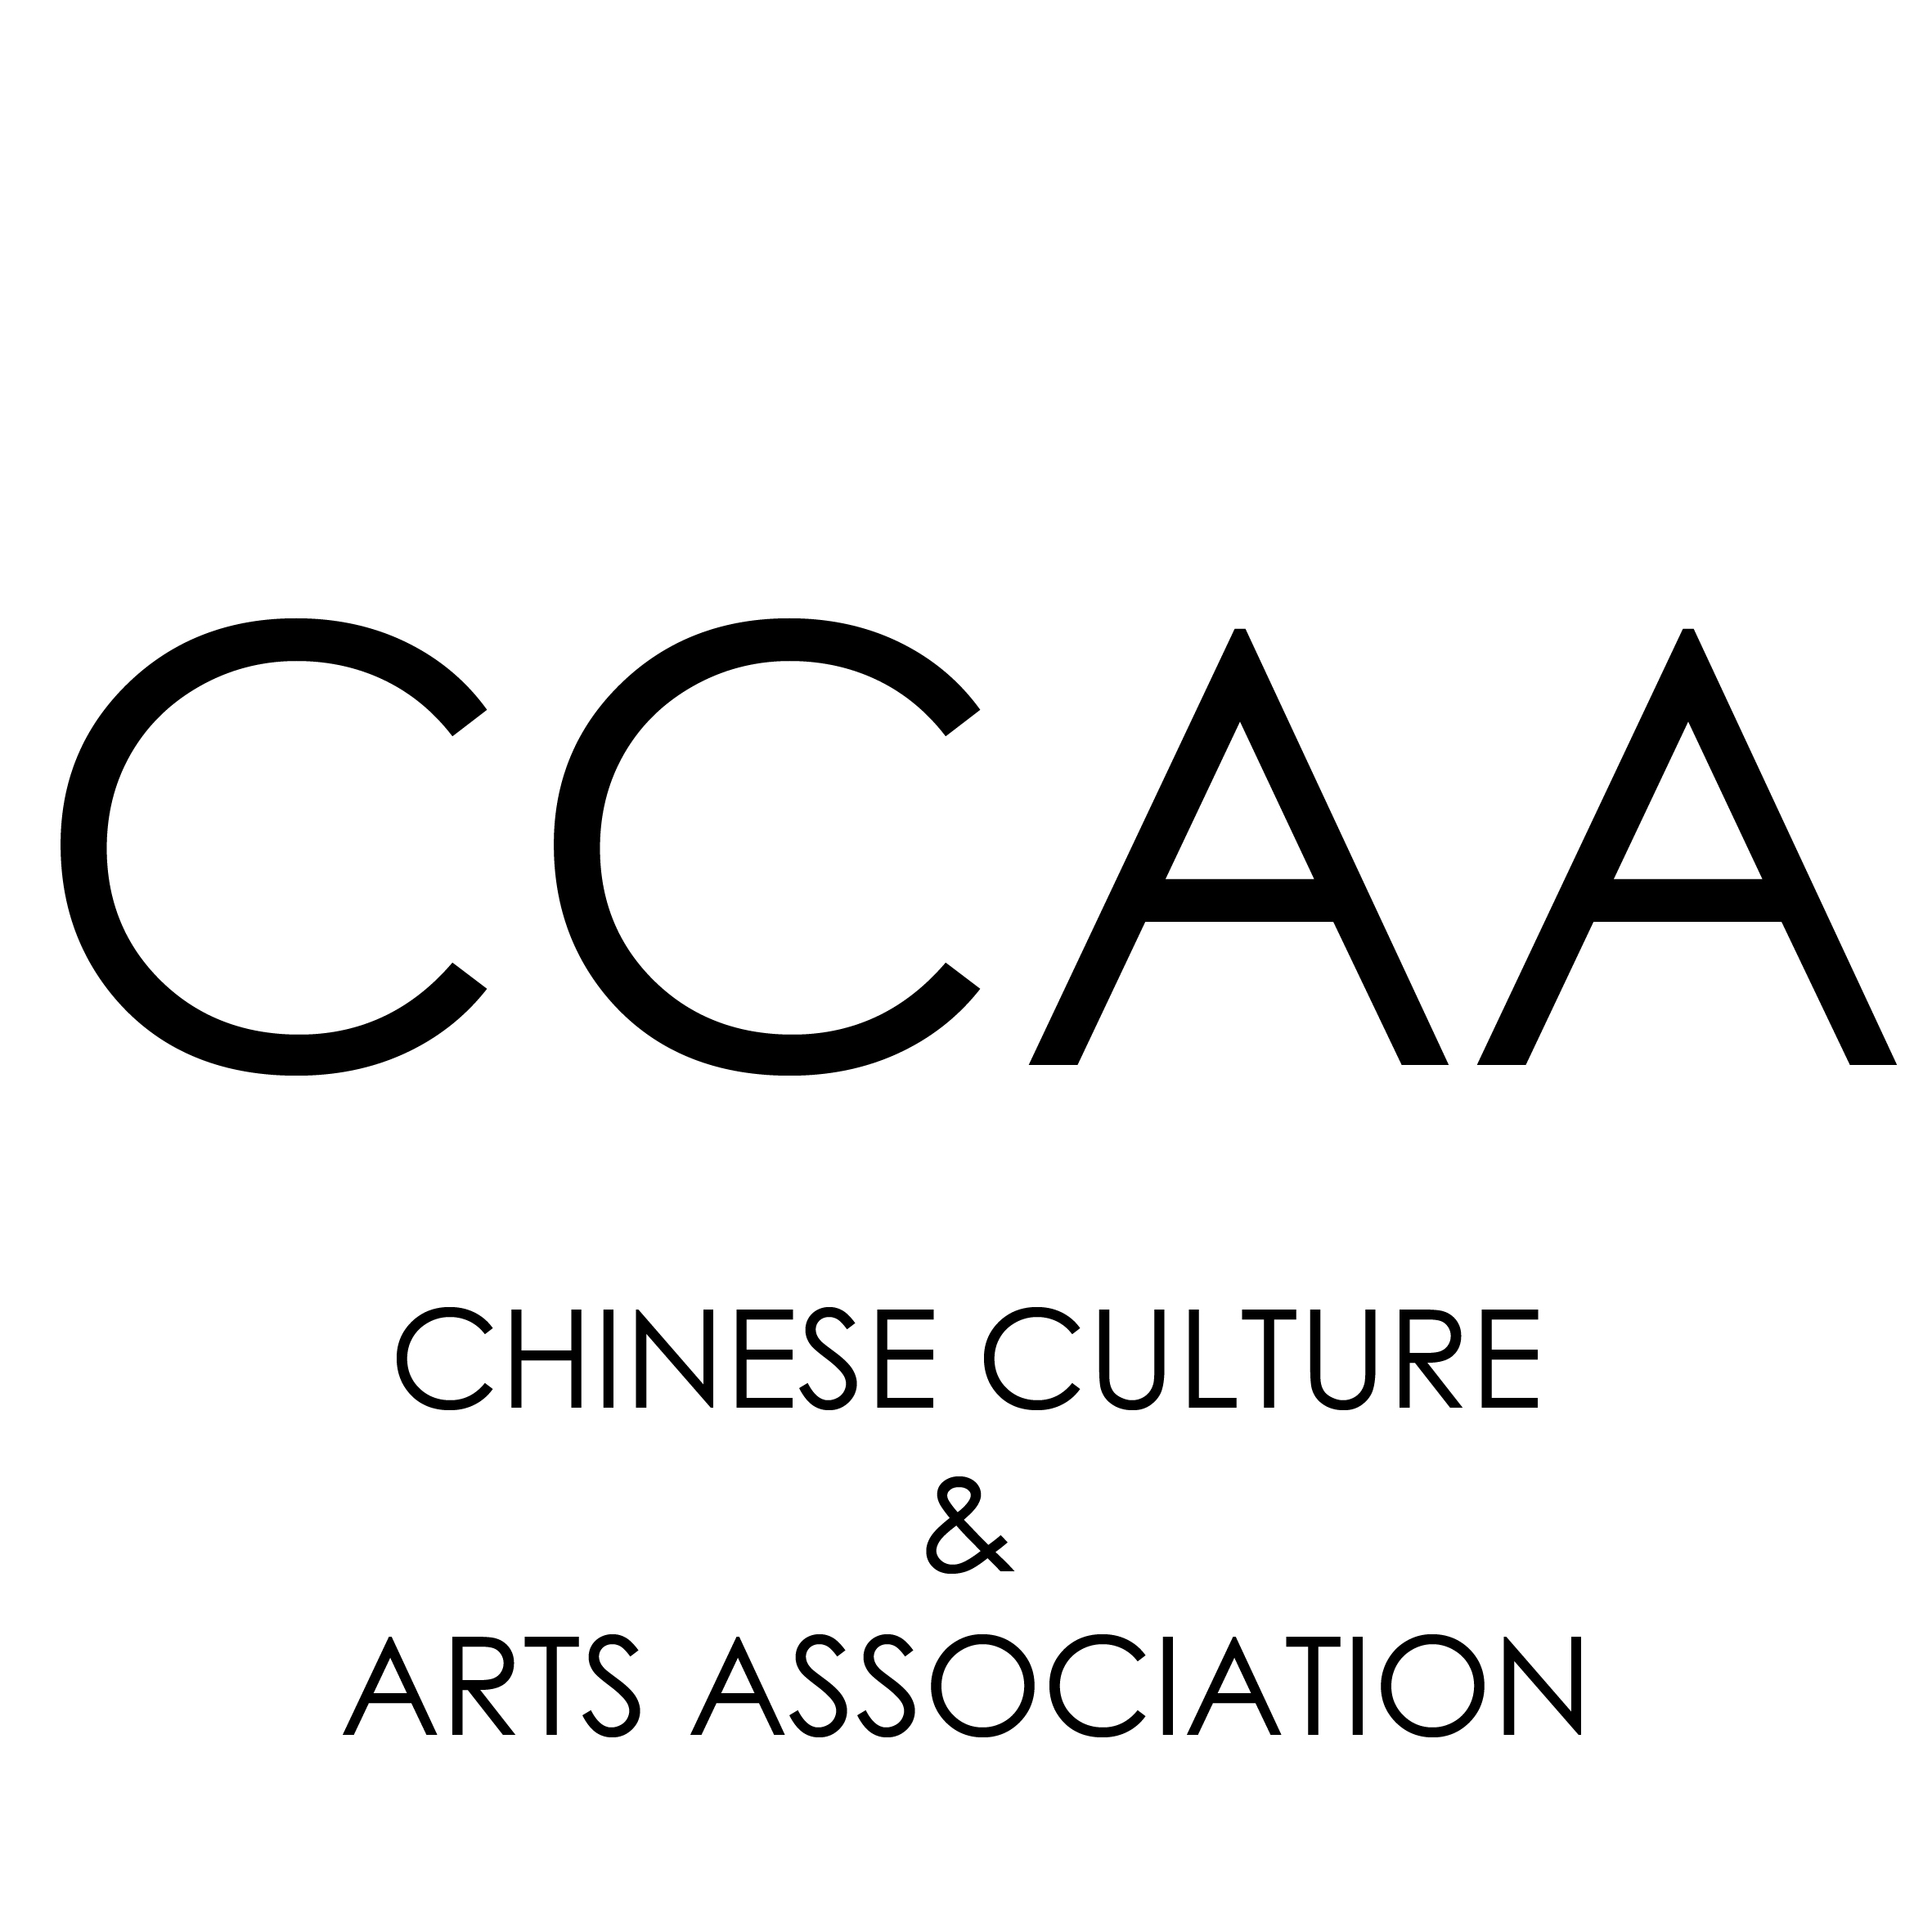 CCAA logo1.jpg